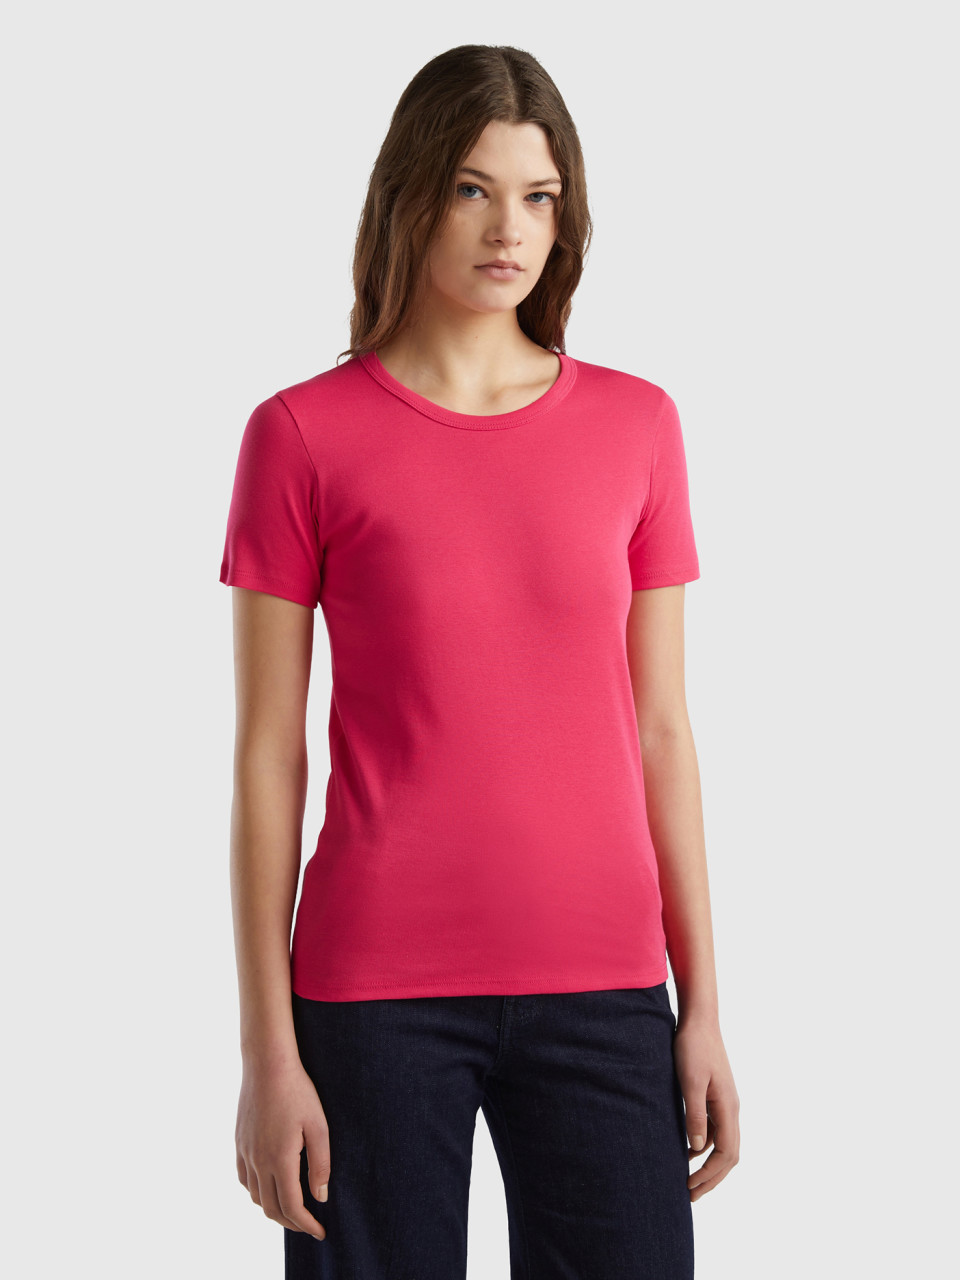 Benetton, Long Fiber Cotton T-shirt, Fuchsia, Women